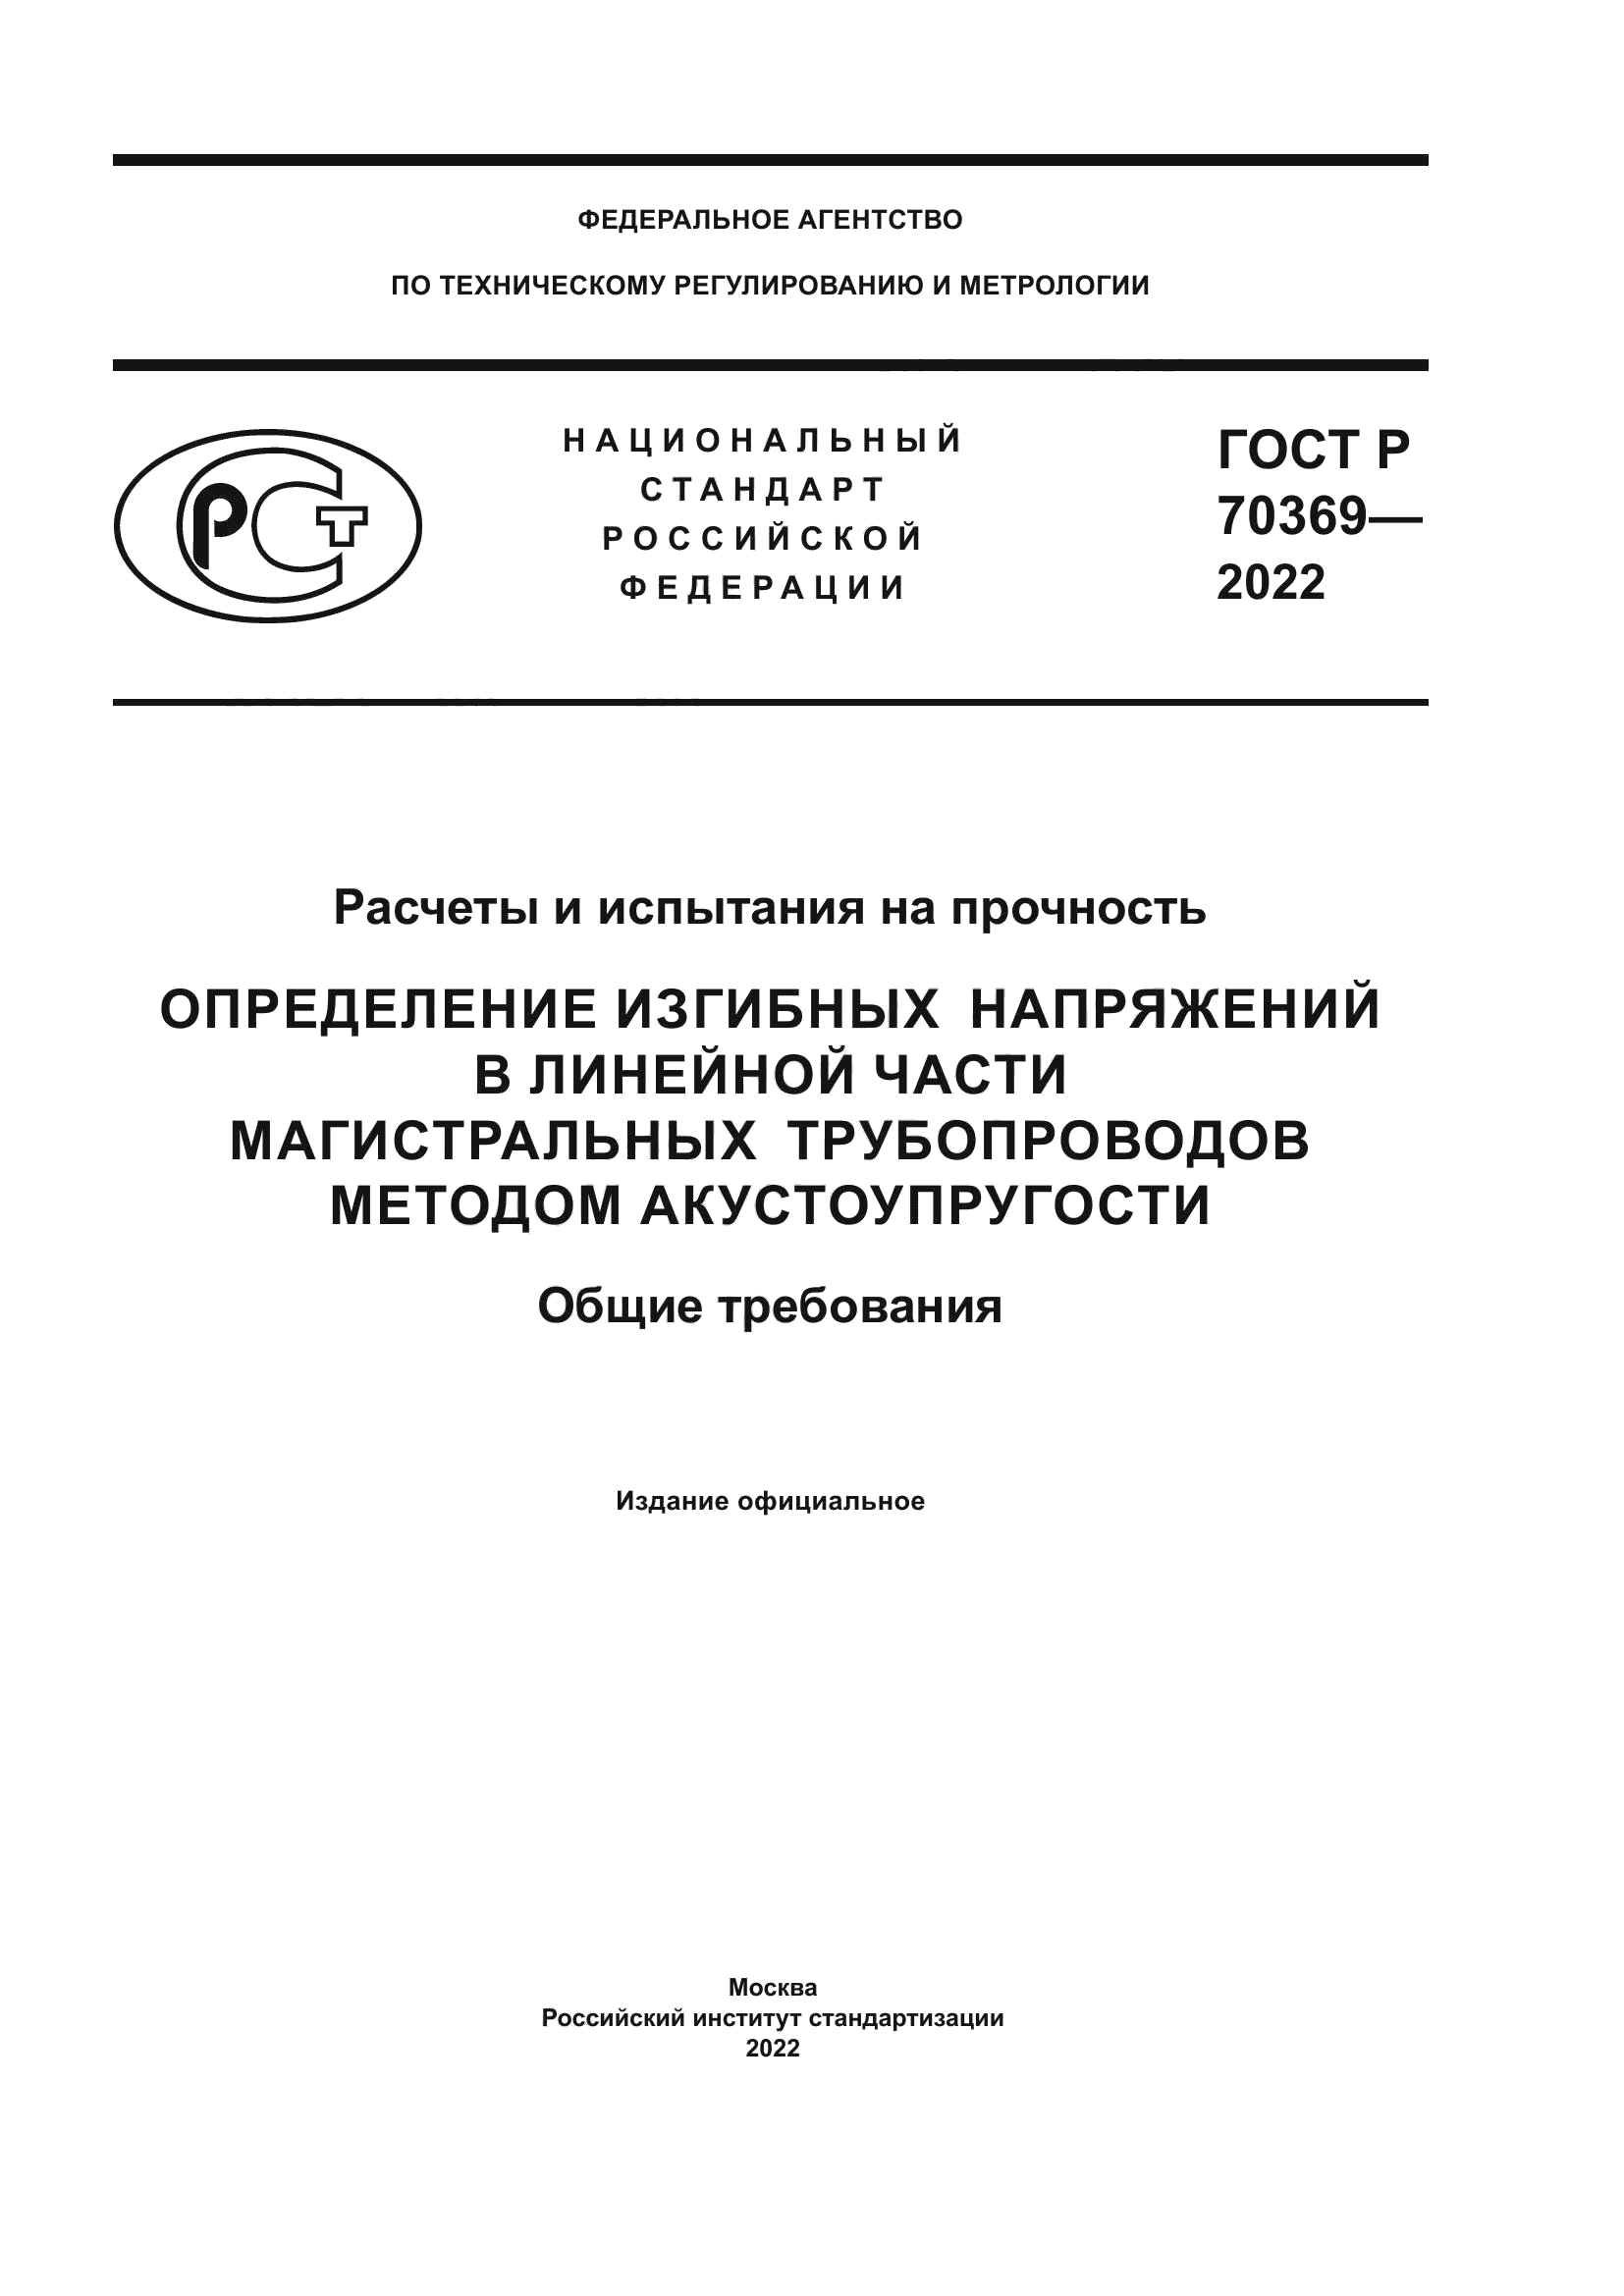 ГОСТ Р 70369-2022